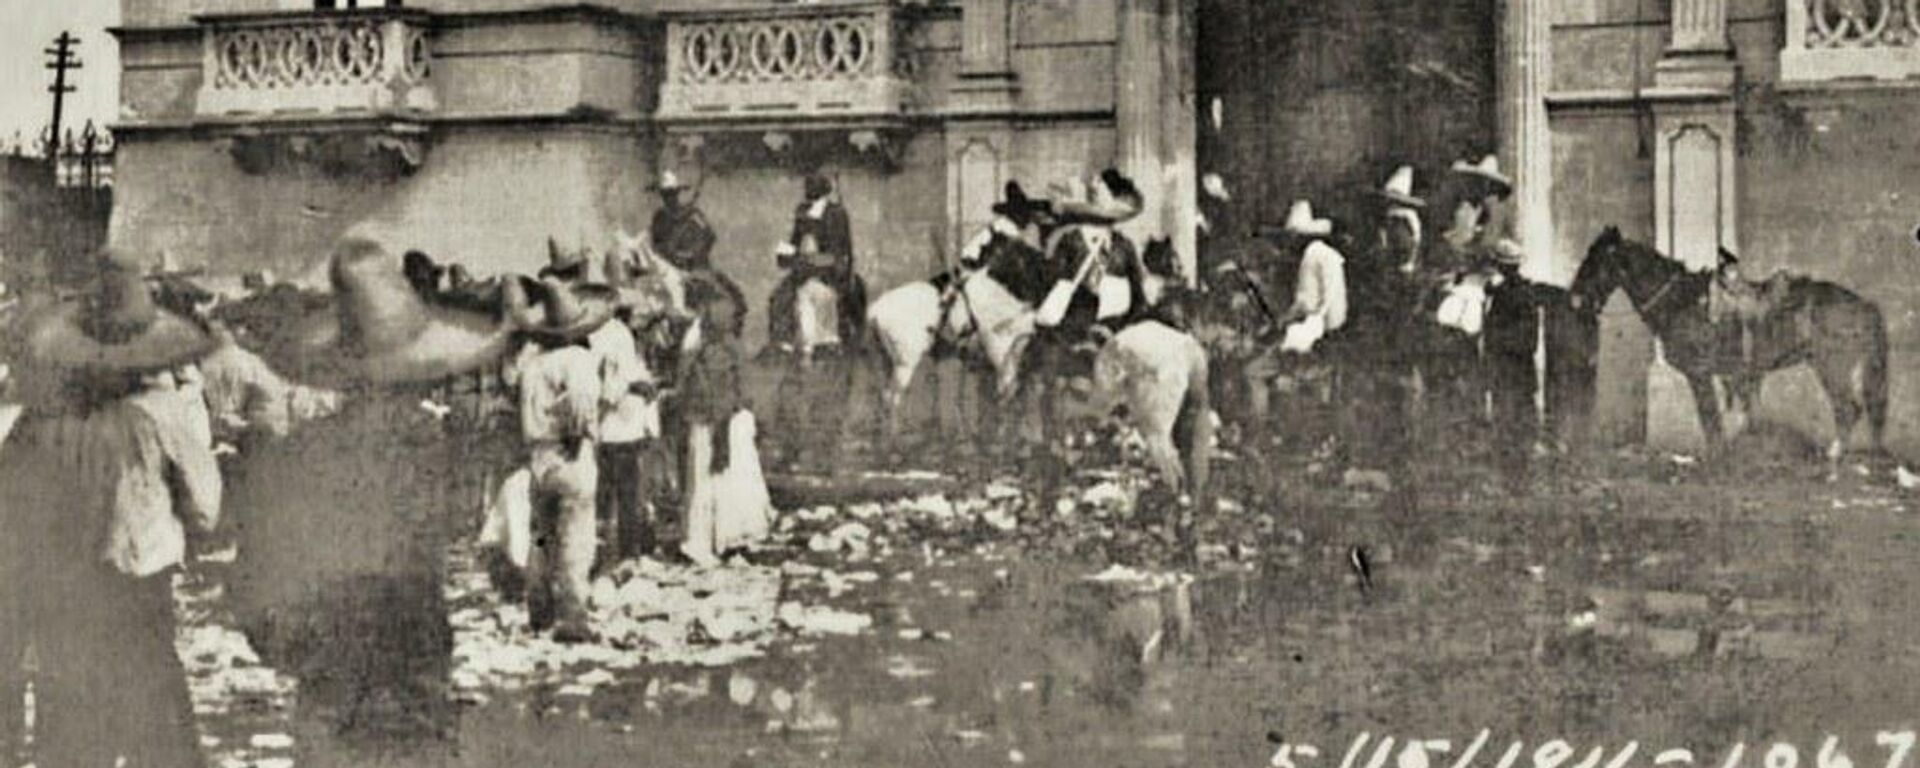 Maderistas entrando al casino de La Laguna el 15 de mayo de 1911 - Sputnik Mundo, 1920, 19.02.2021